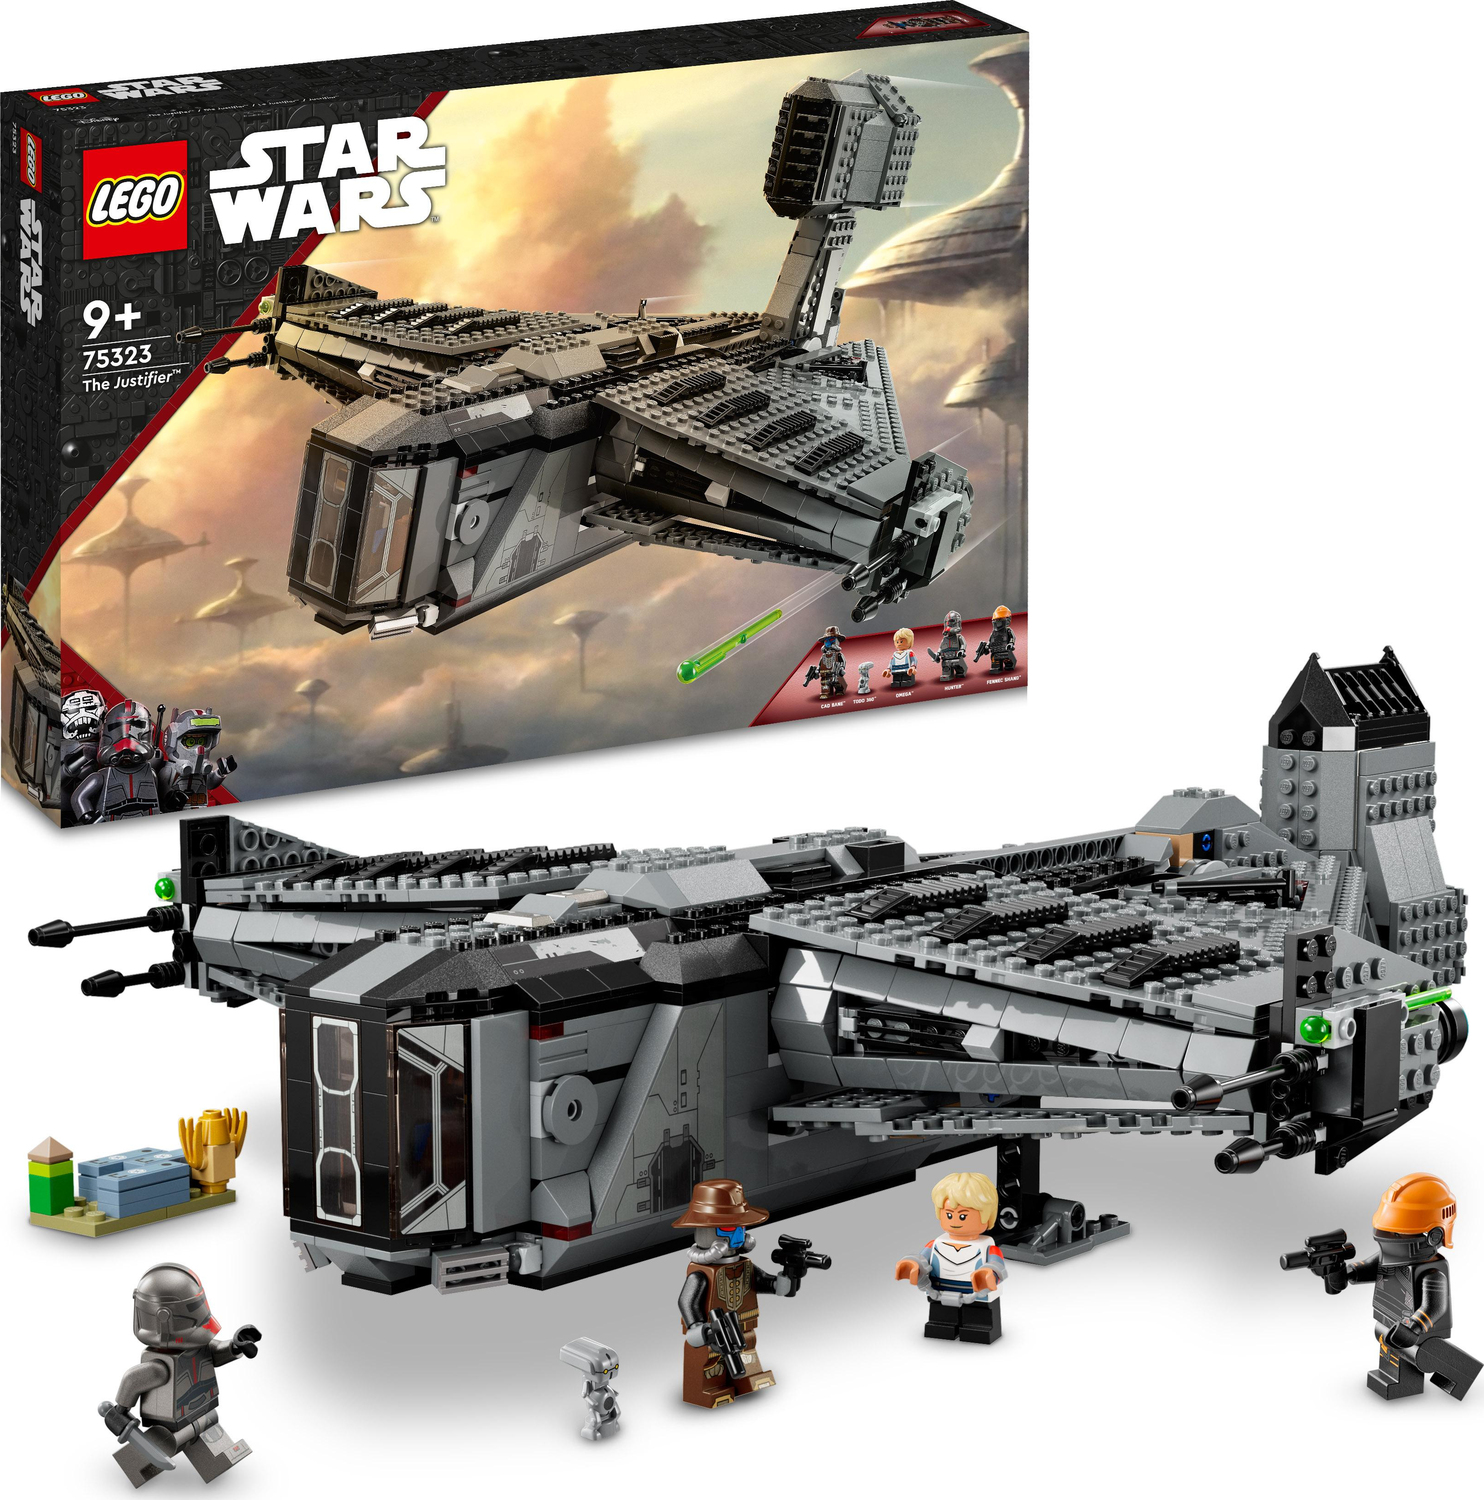 LEGO Star Wars The Justifier Bad Batch Set